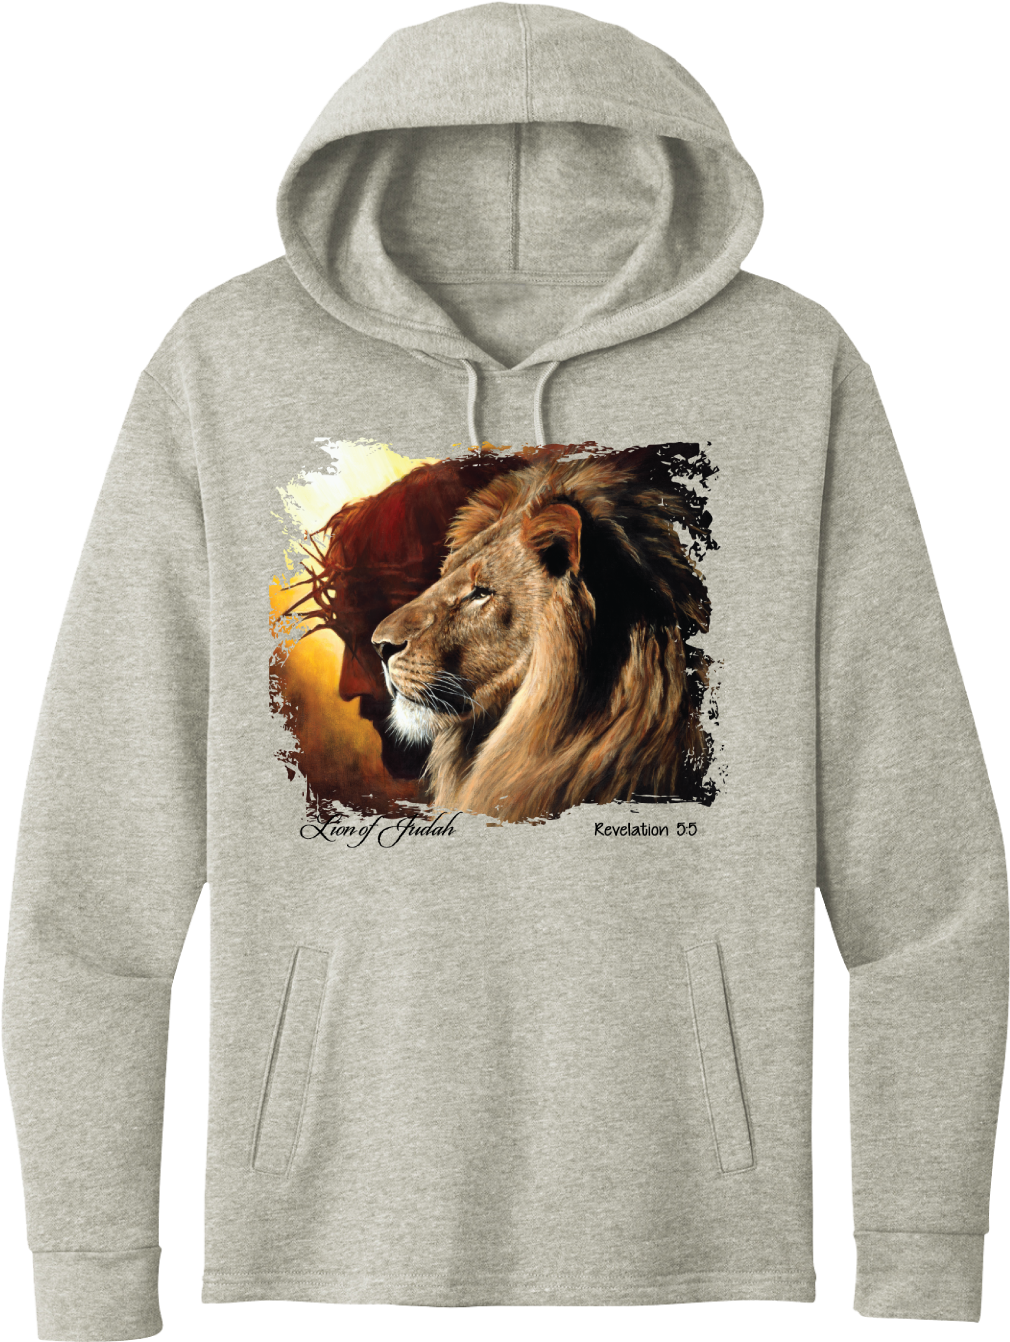 The Lion of Judah - Unisex Hooded Sweatshirt